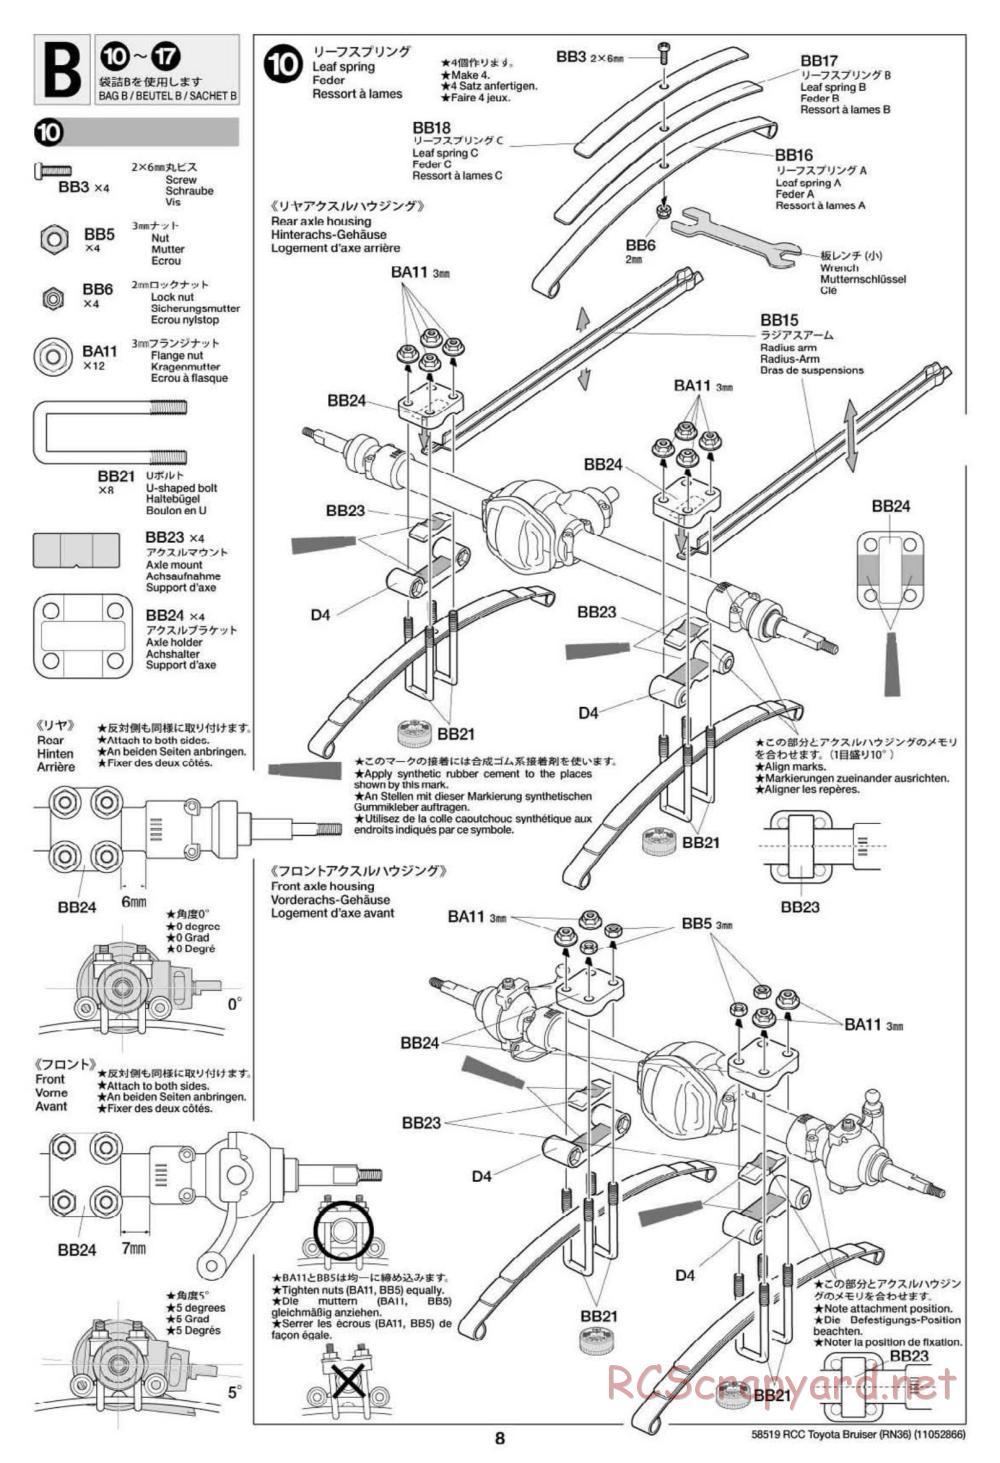 Tamiya - Toyota 4x4 Pick Up Bruiser Chassis - Manual - Page 8